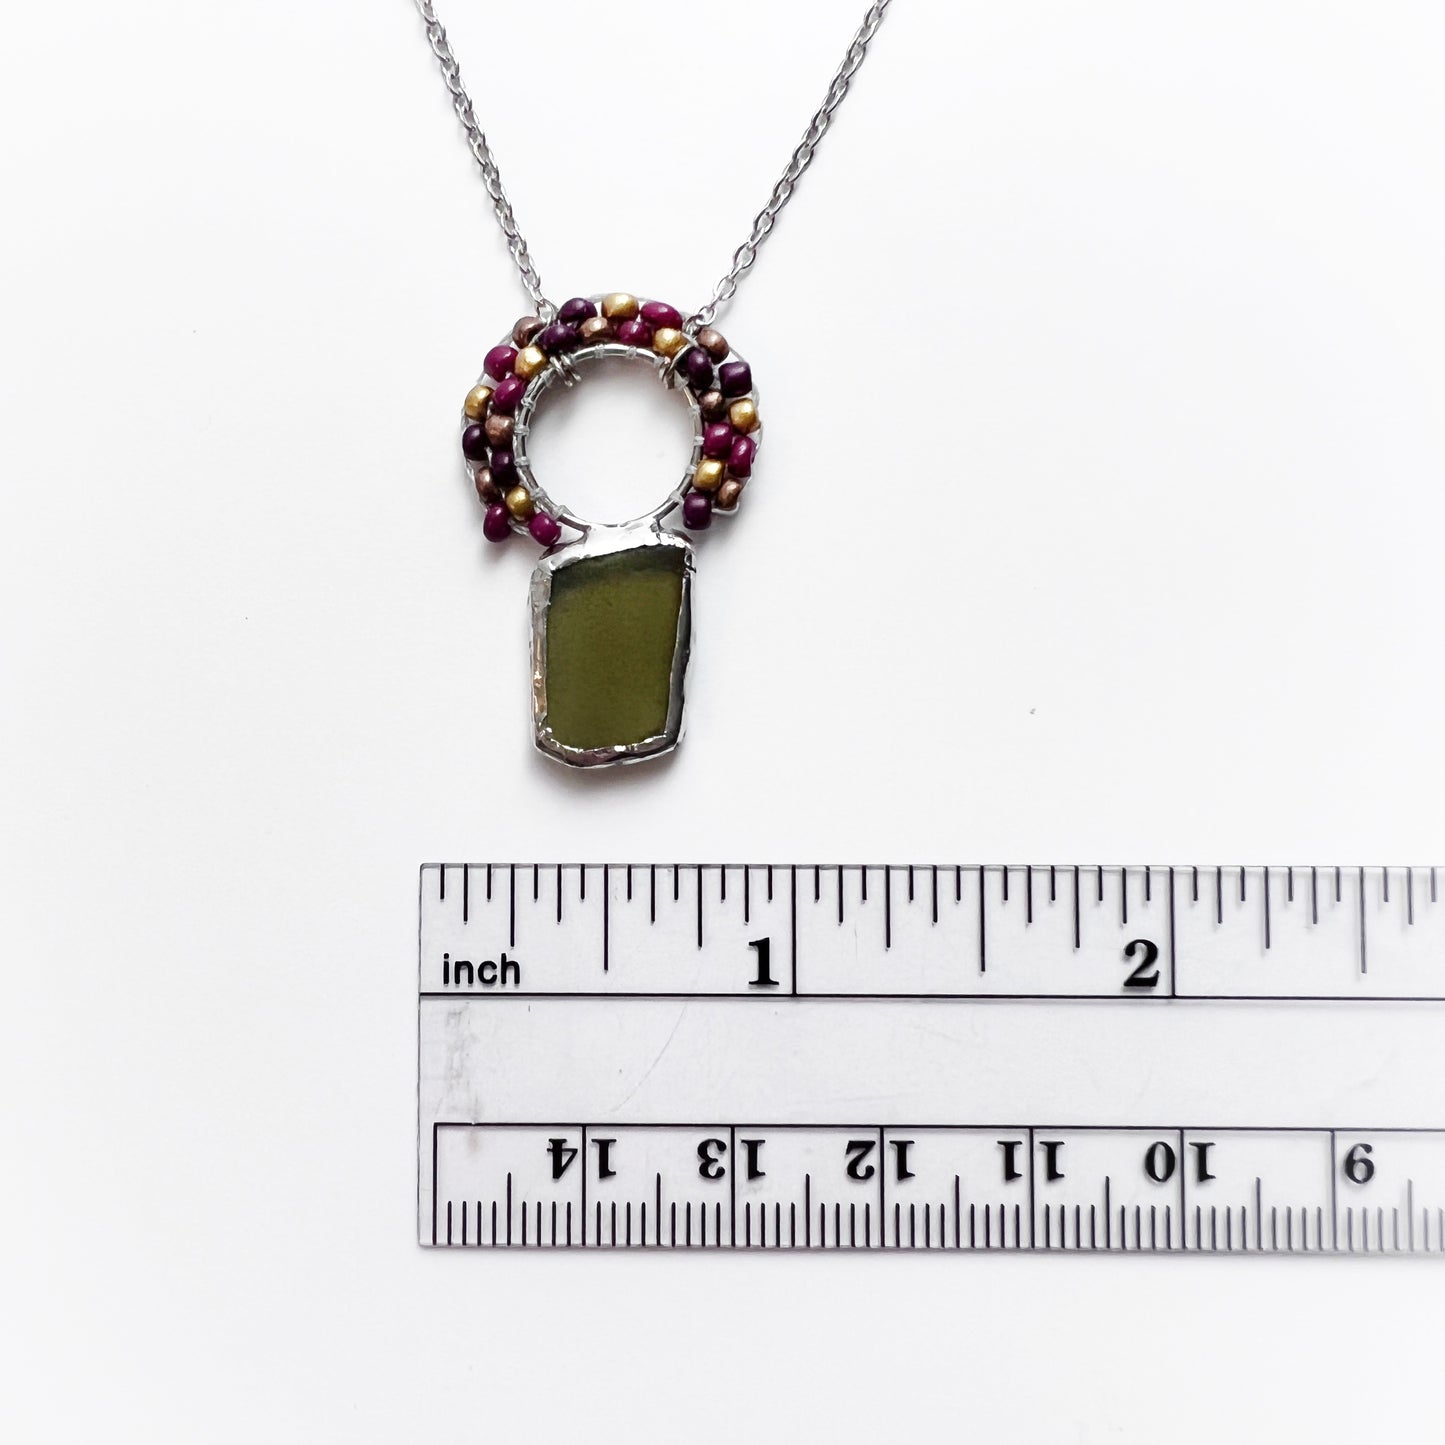 Oasis Sea Glass Necklace